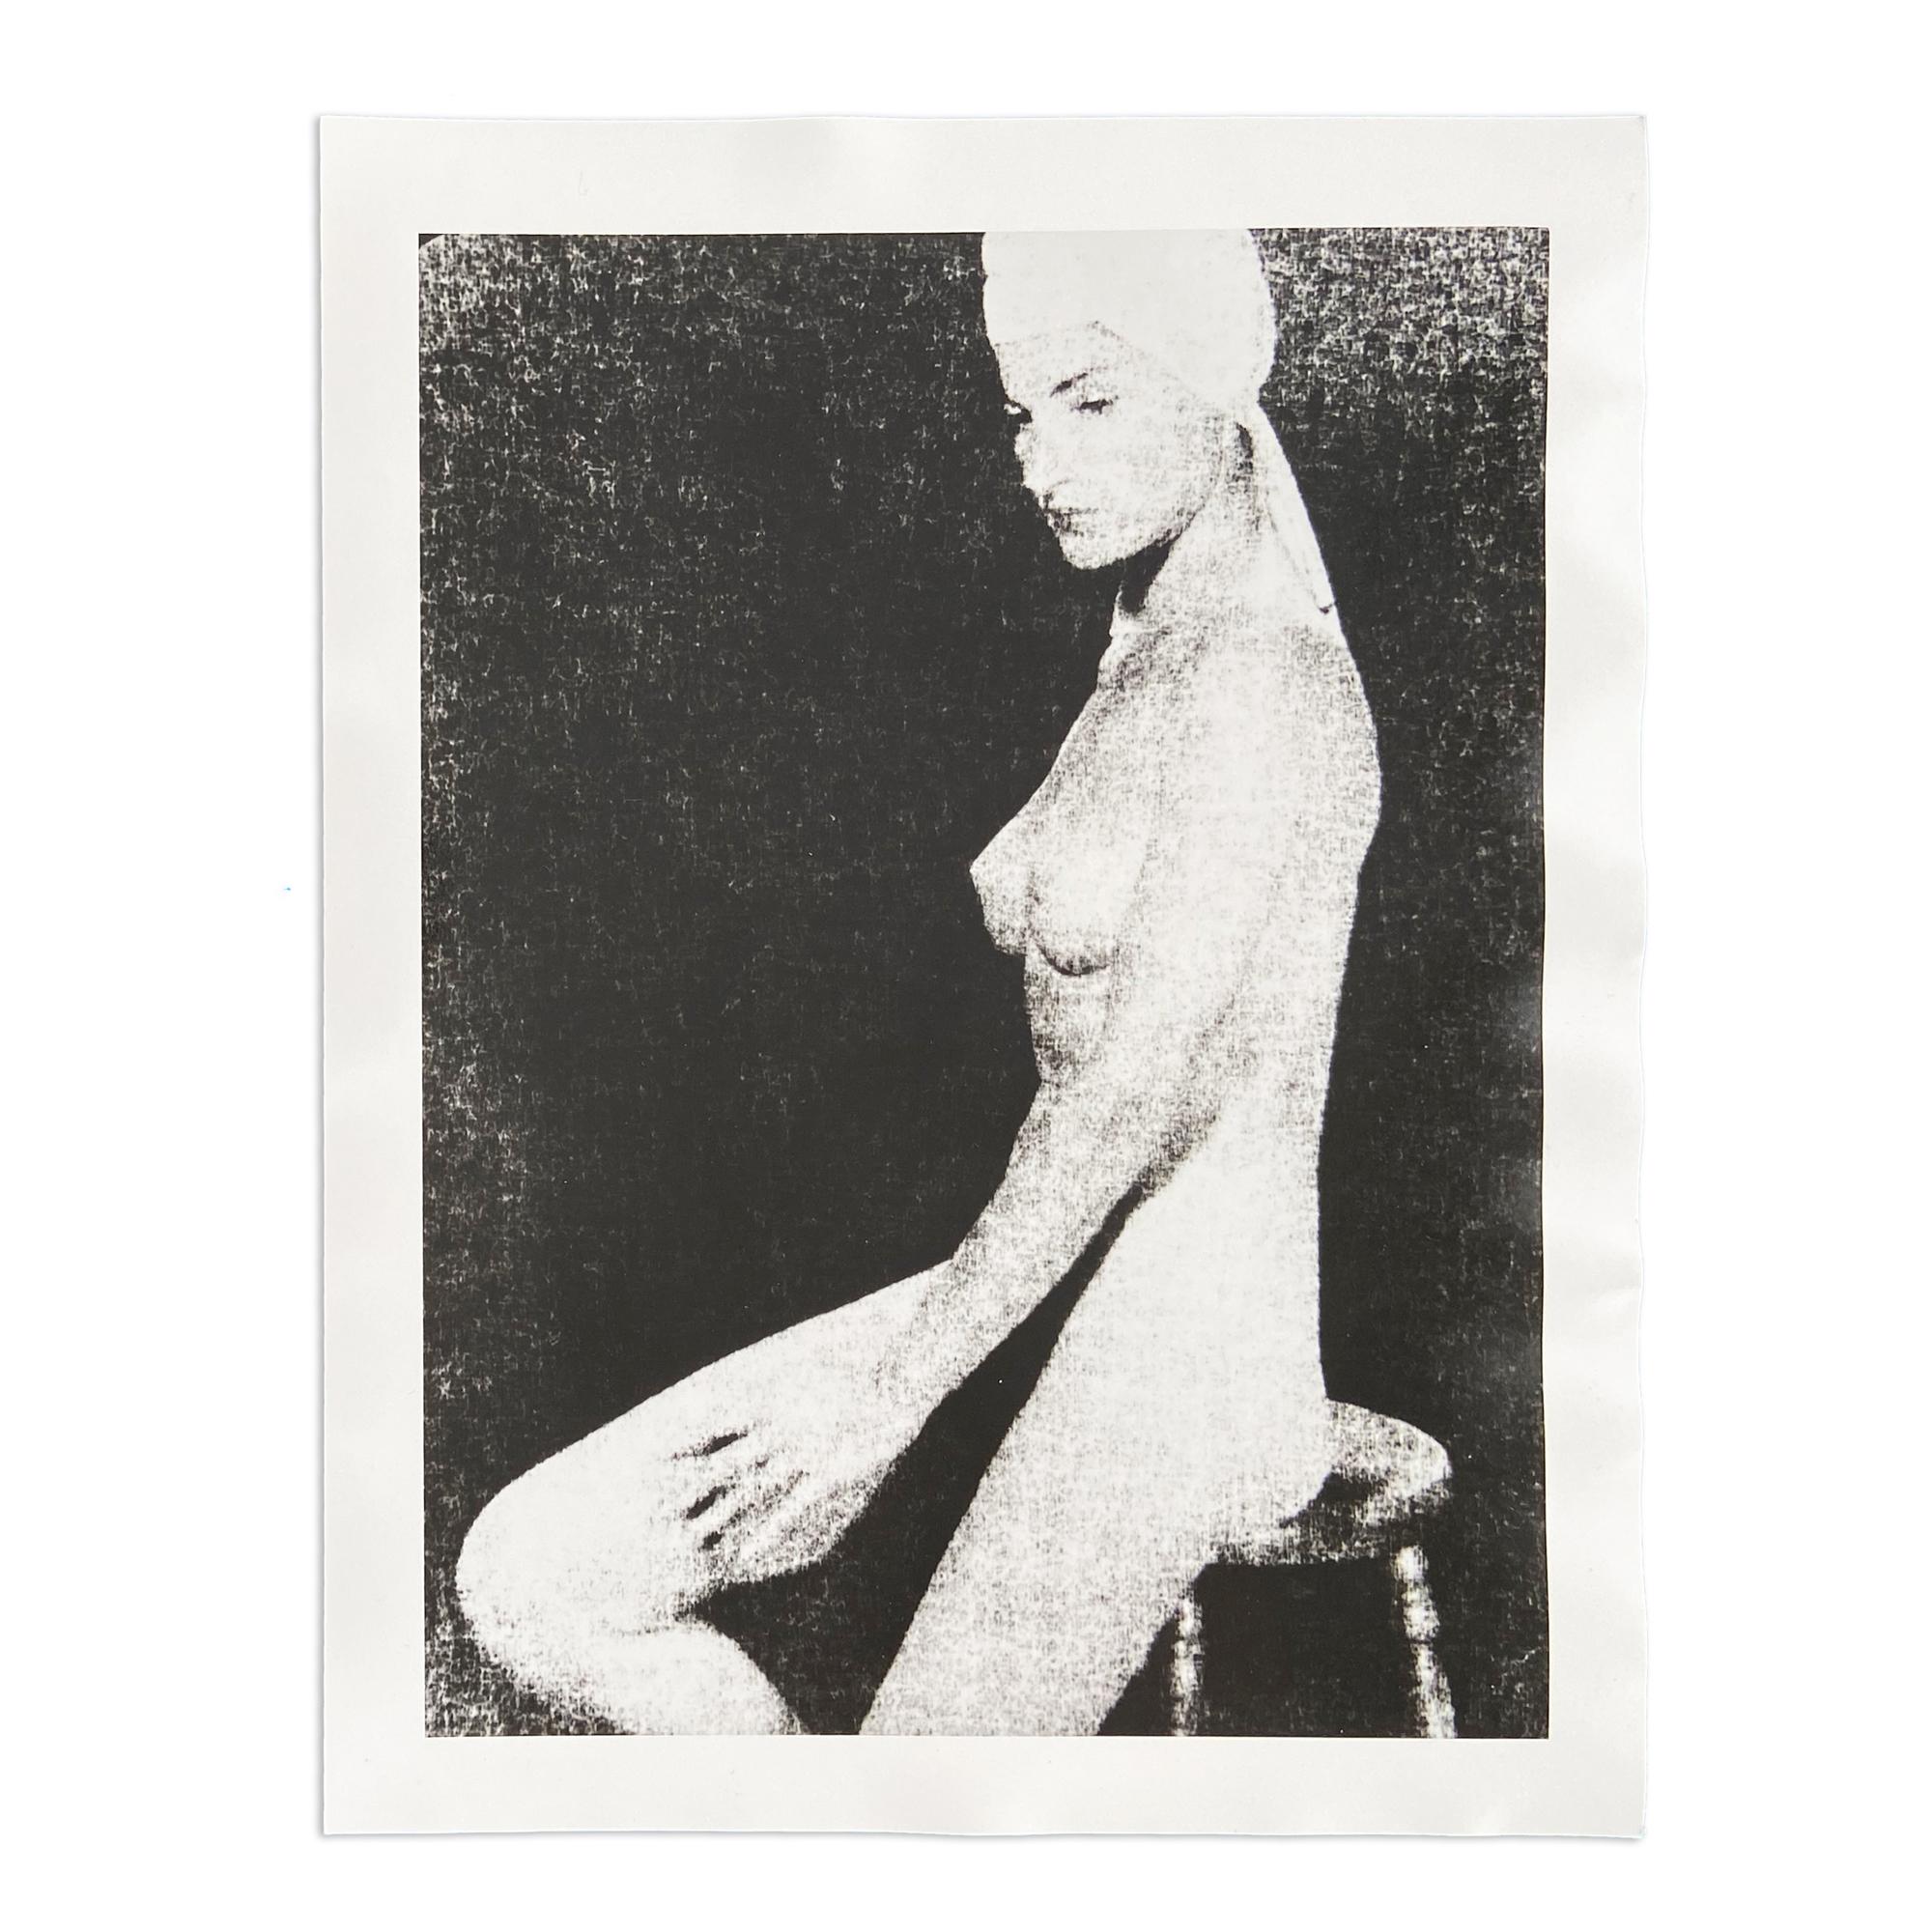 Man Ray Black and White Photograph - Juliet, 1932, Silver Gelatin Print, Dada, Surrealist, Modern Art